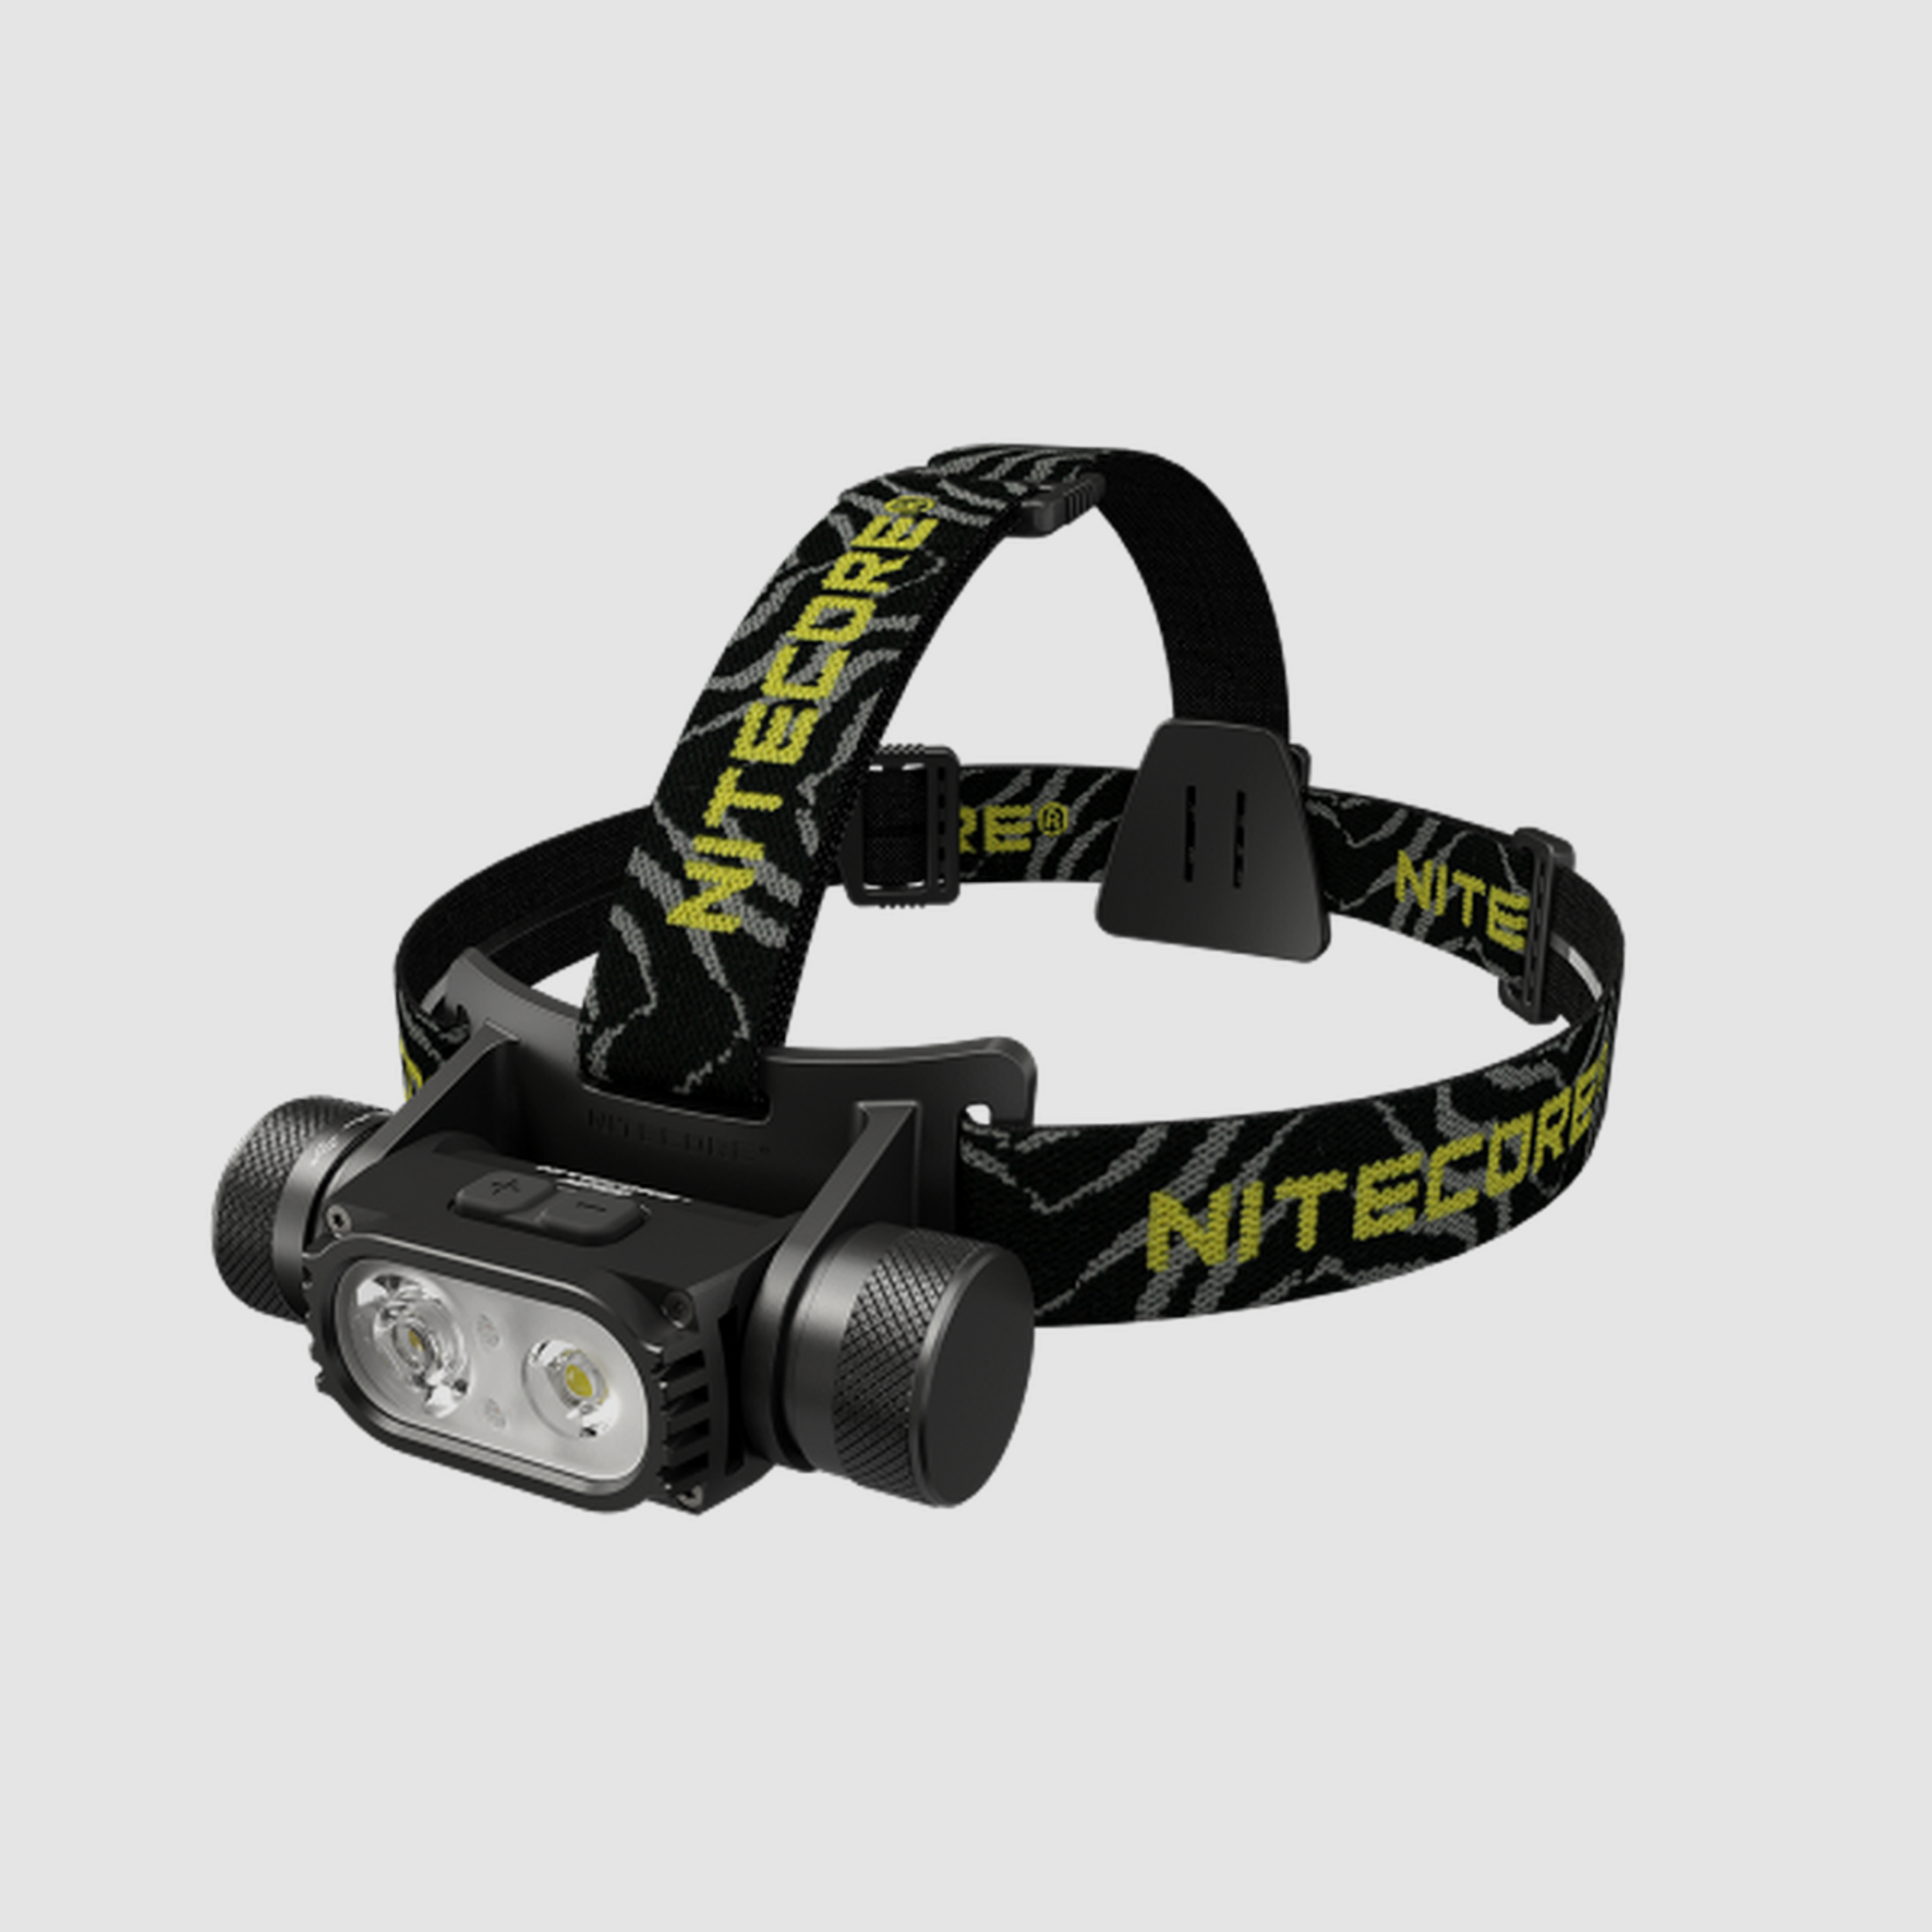 Nitecore Stirnlampe HC68 2000 Lumen, E-Focus